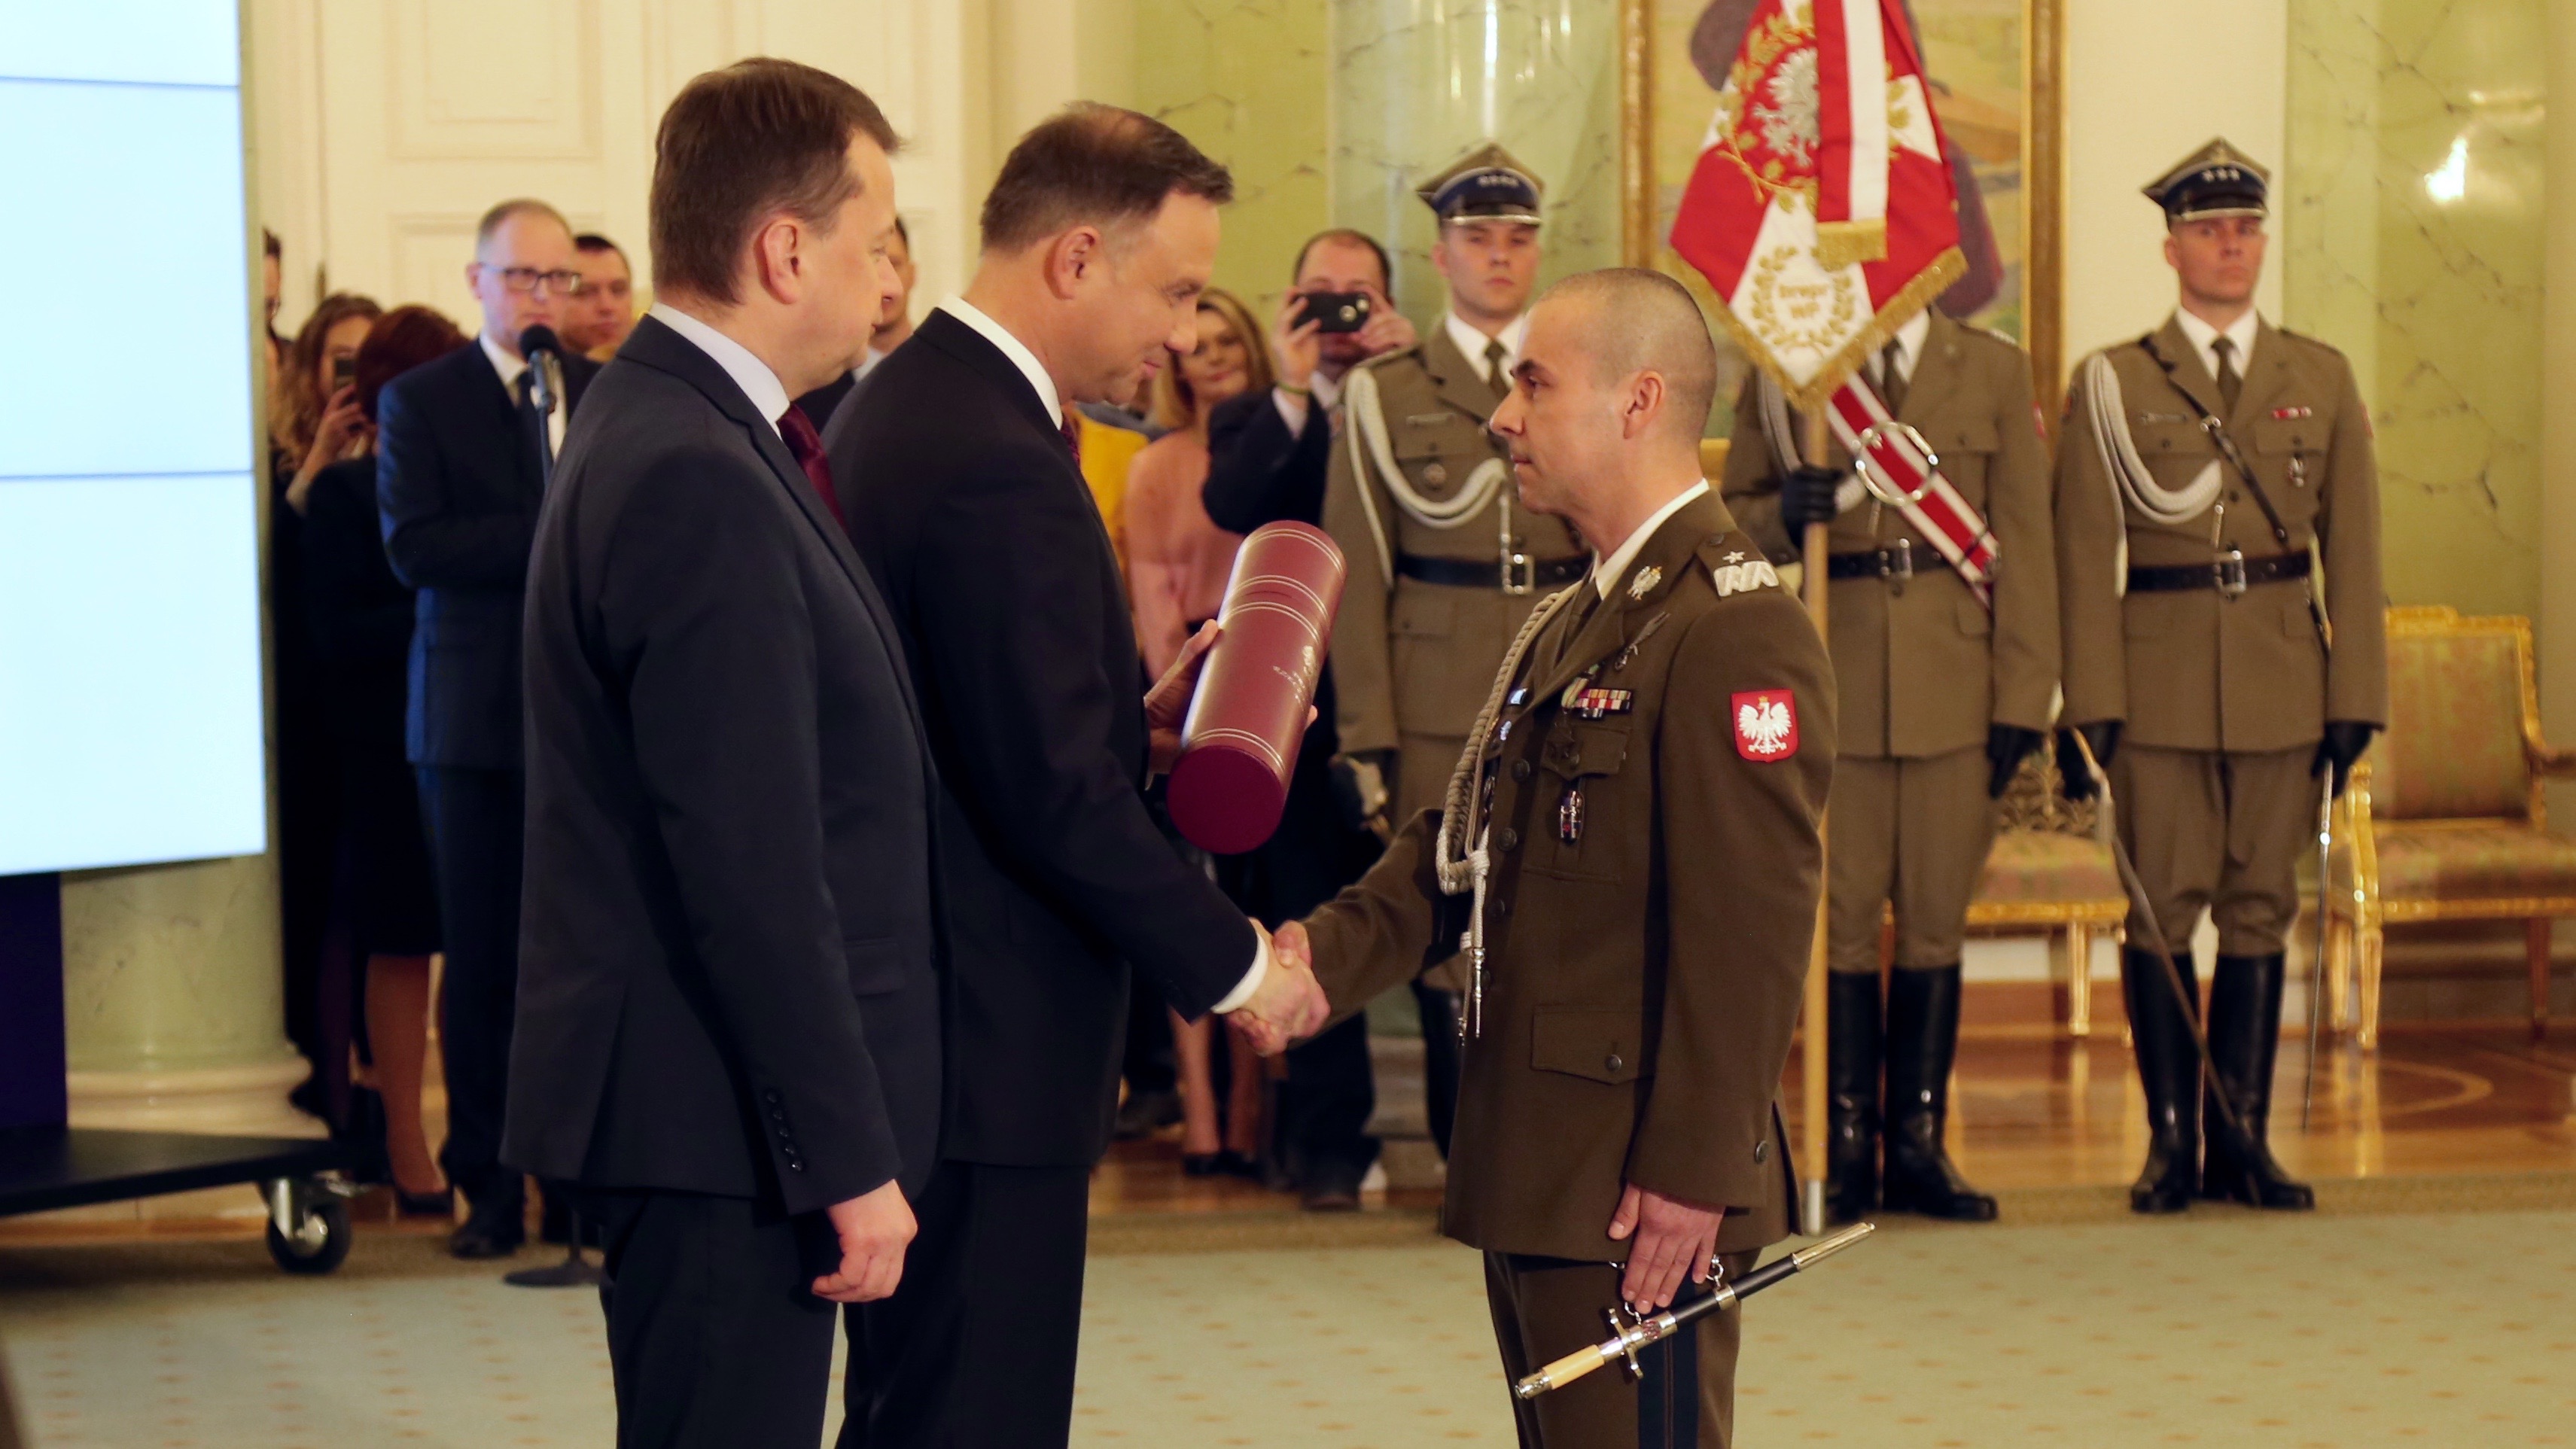 Nominację odbiera gen. bryg. Norbert Iwanowski. Fot. Rafał Lesiecki / Defence24.pl